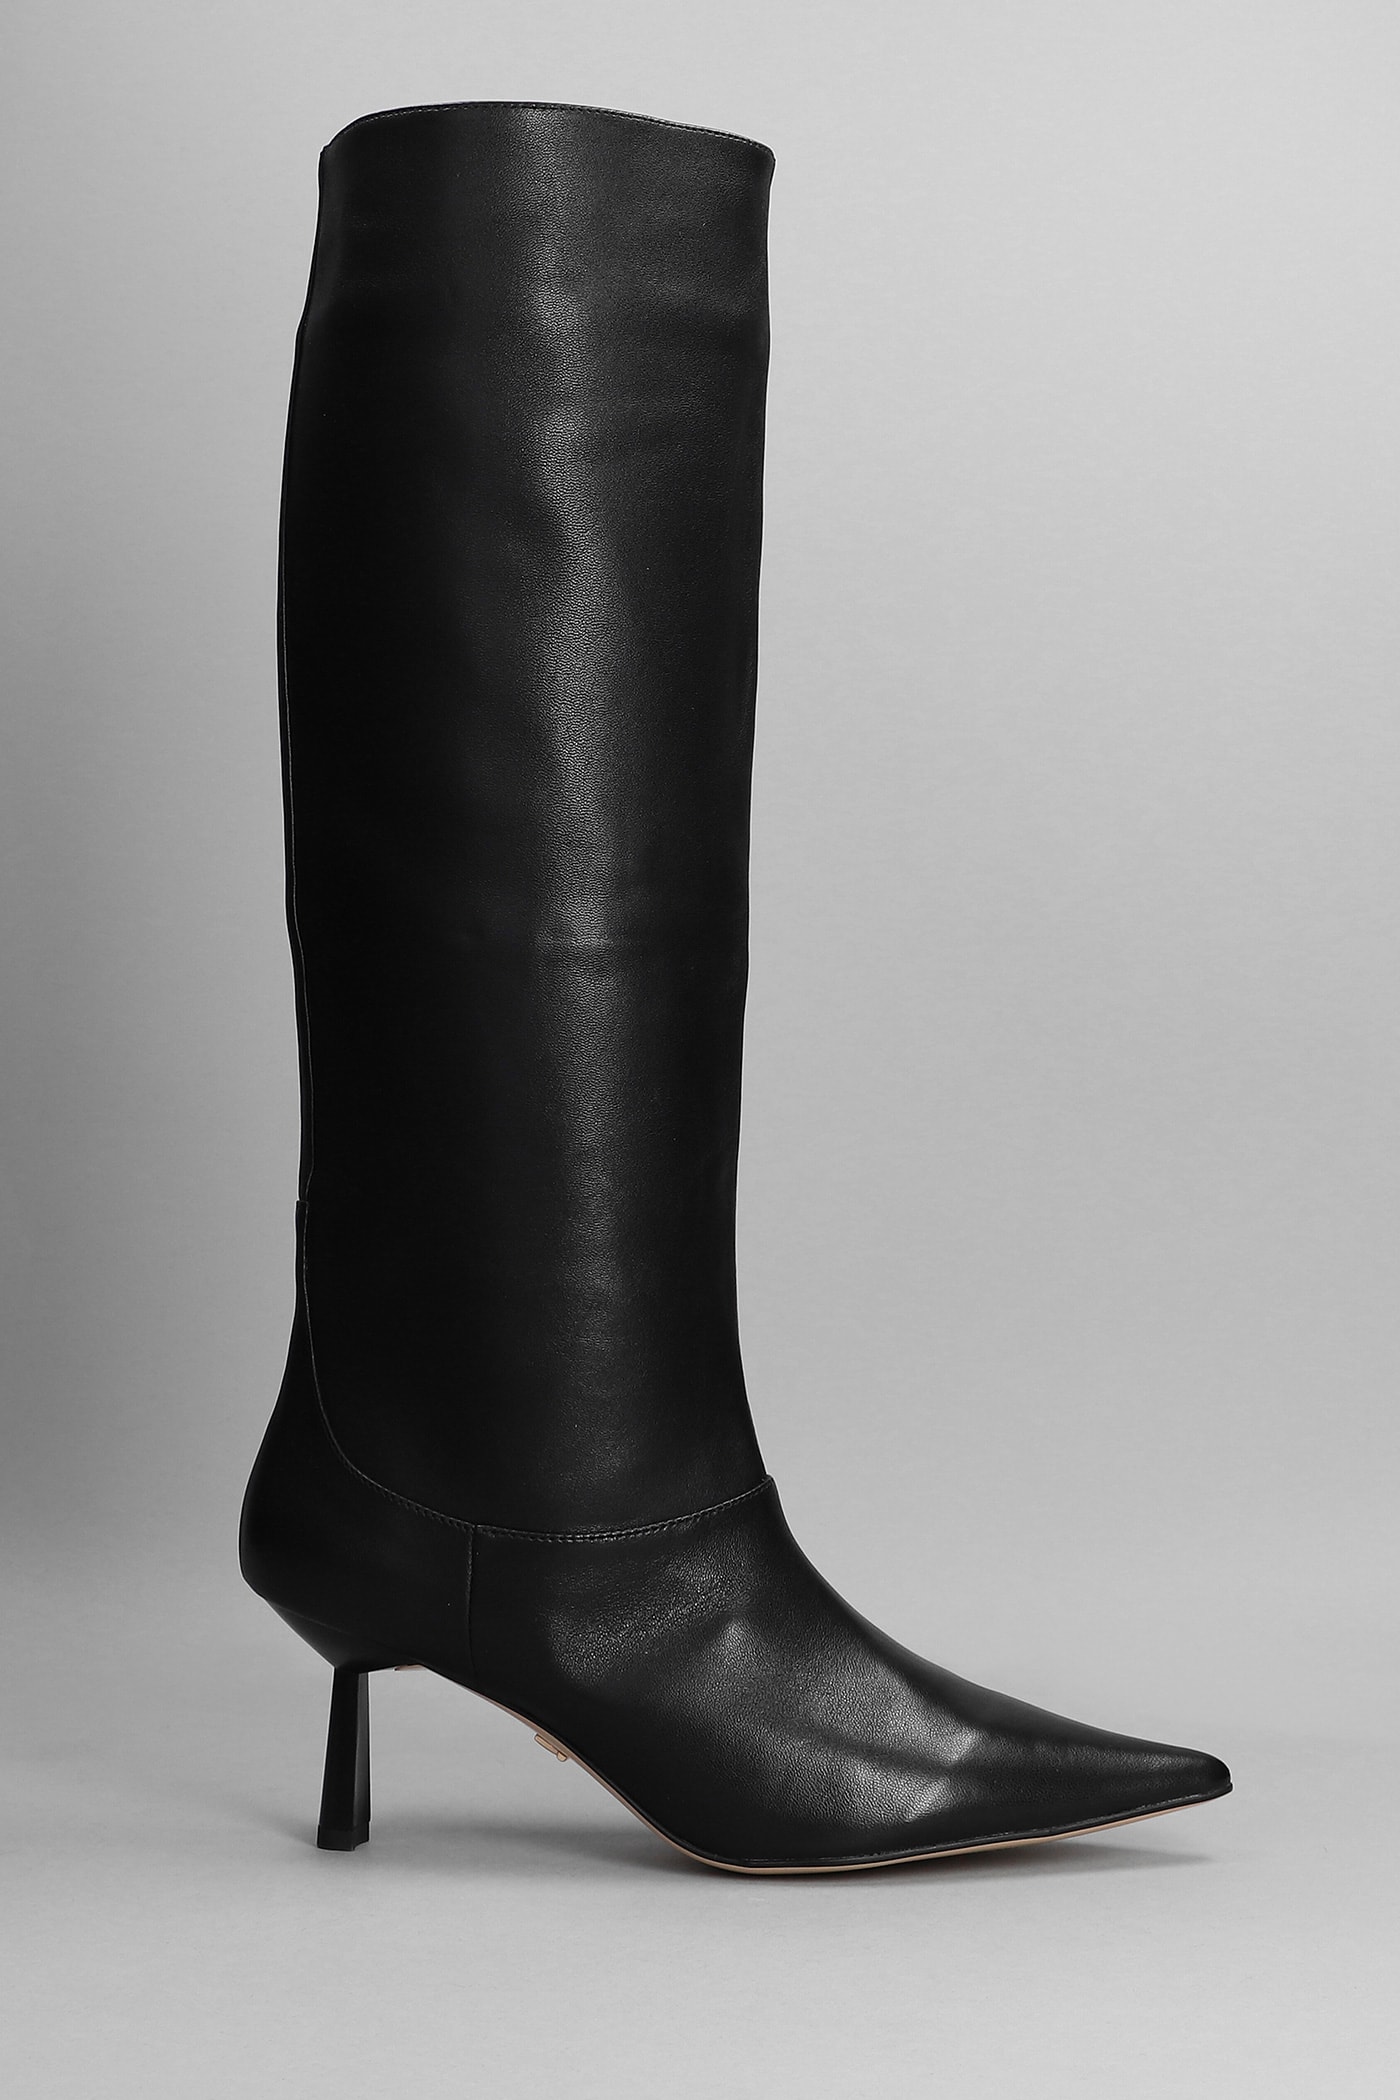 Lola Cruz High Heels Boots In Black Leather